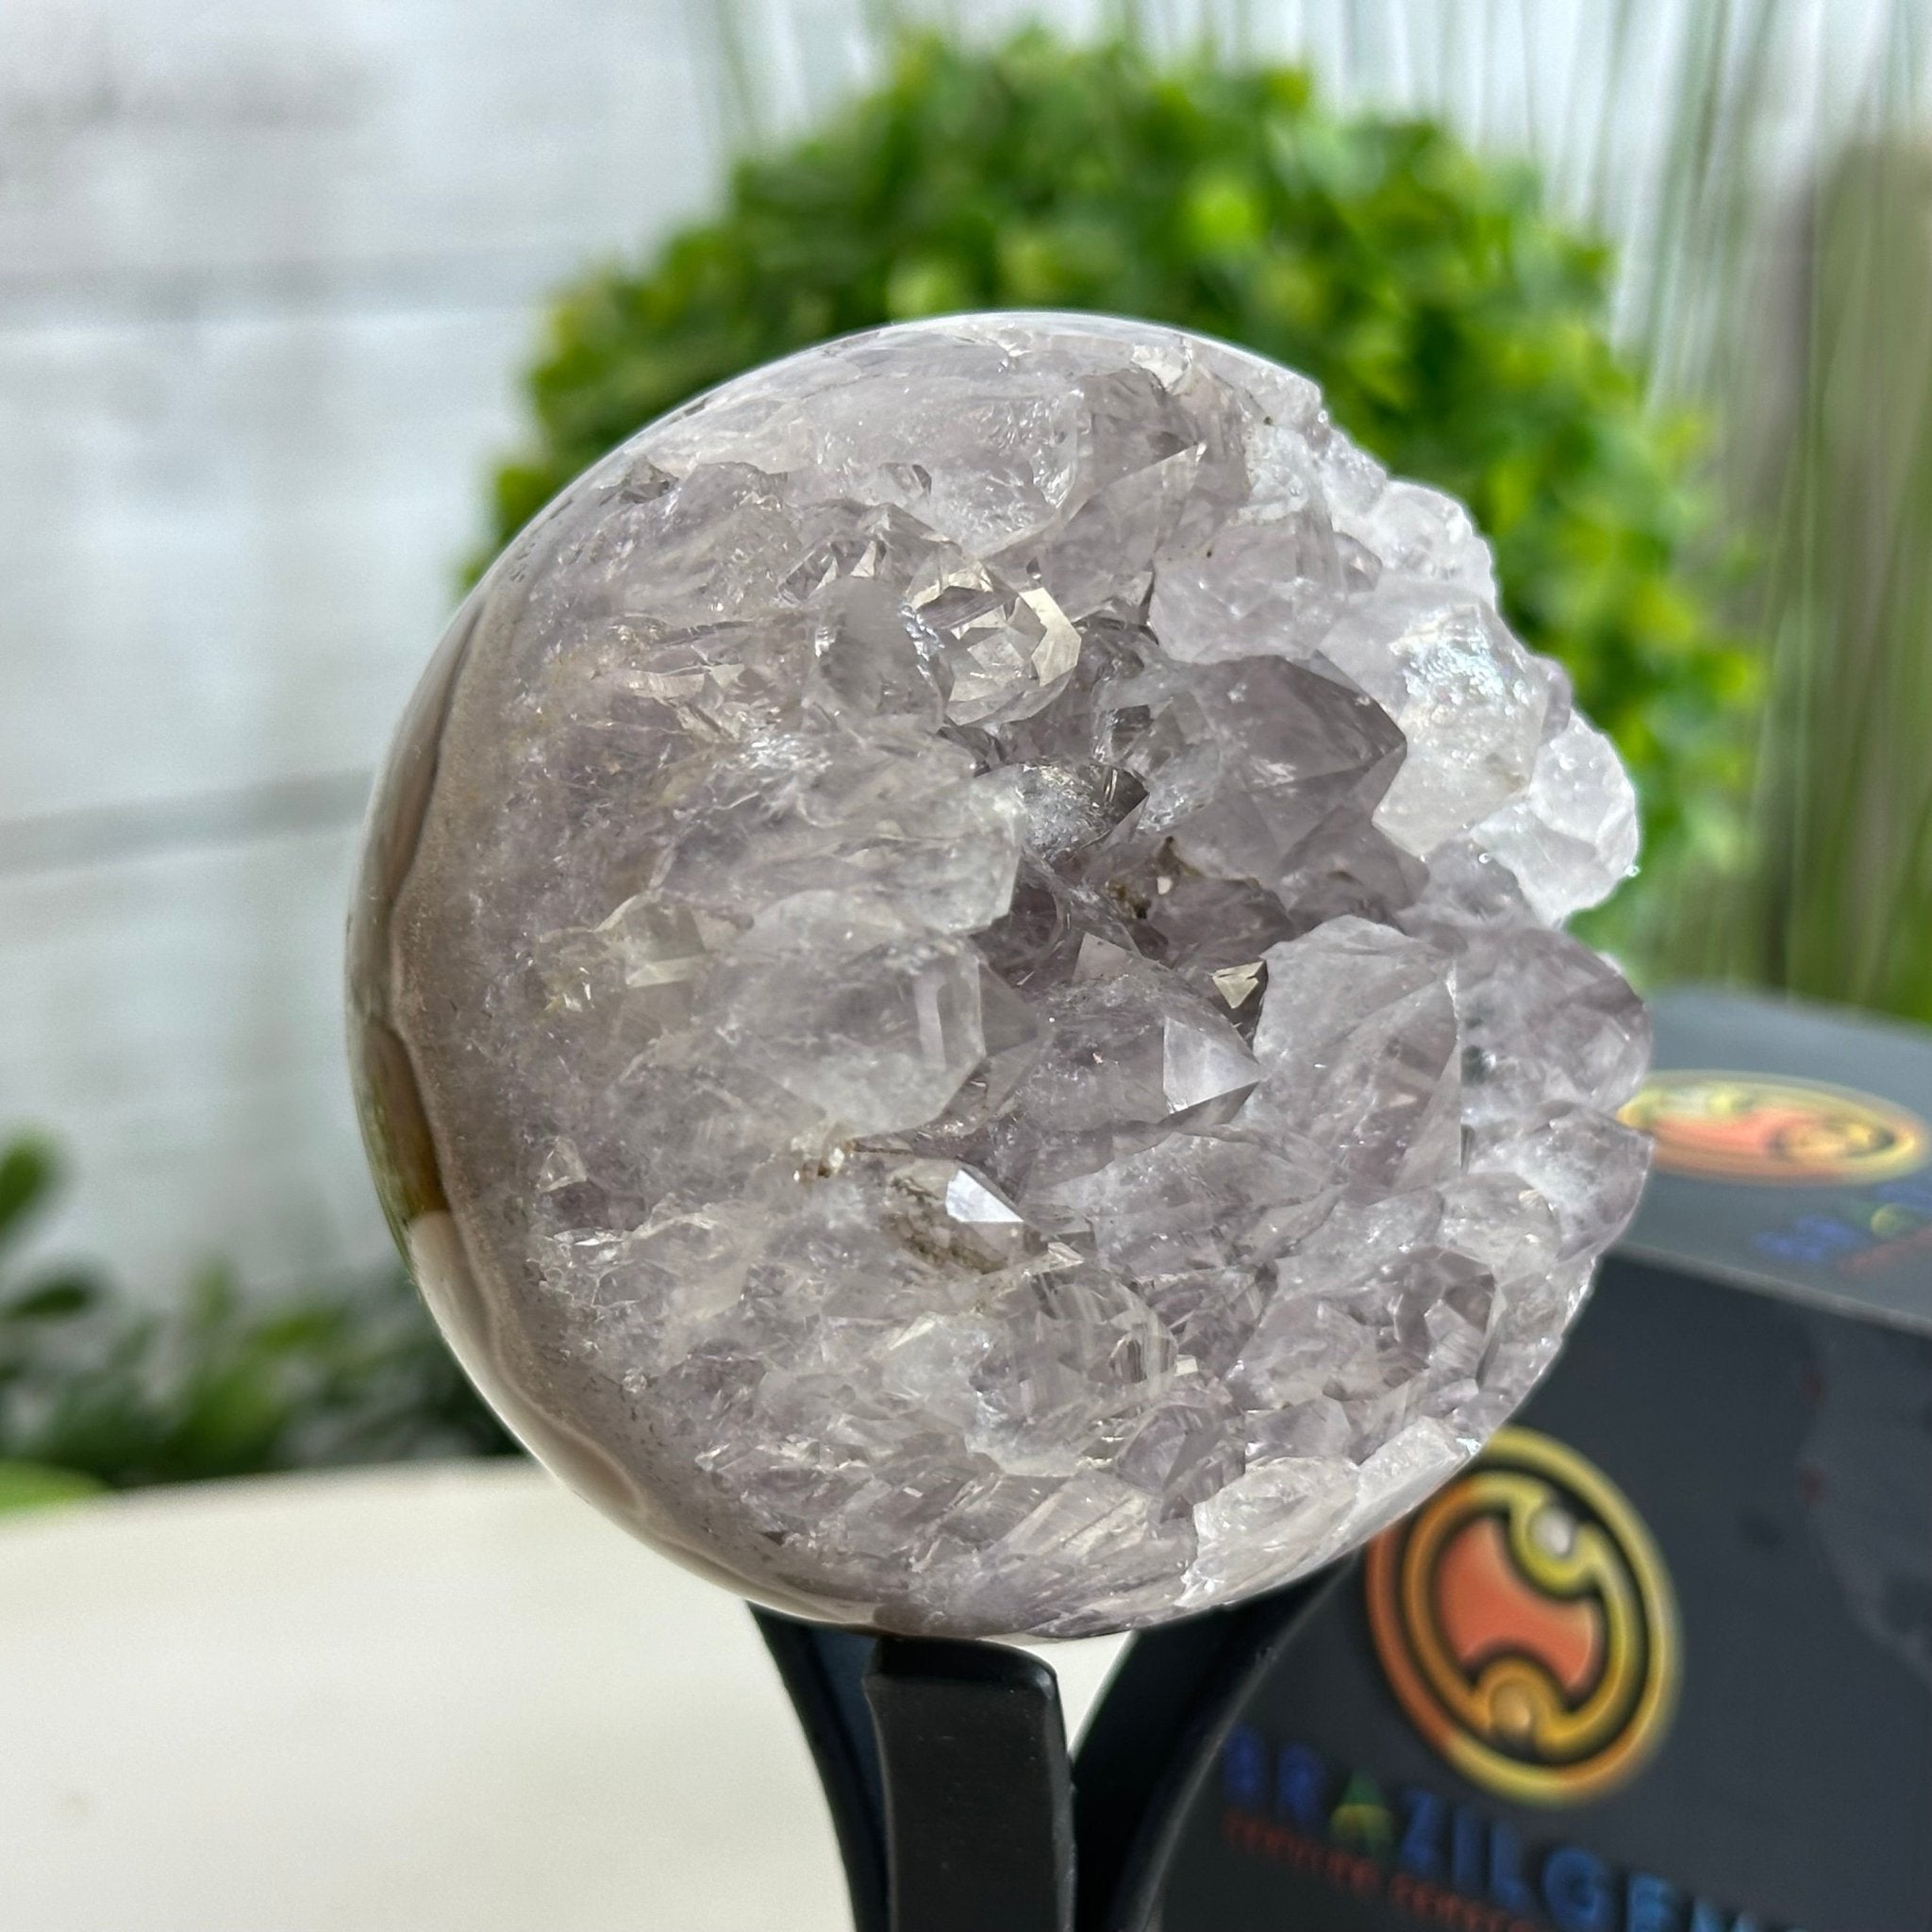 Druzy Amethyst Sphere on a Metal Stand, 0.7 lbs & 5.1" Tall #5630-0029 - Brazil GemsBrazil GemsDruzy Amethyst Sphere on a Metal Stand, 0.7 lbs & 5.1" Tall #5630-0029Spheres5630-0029